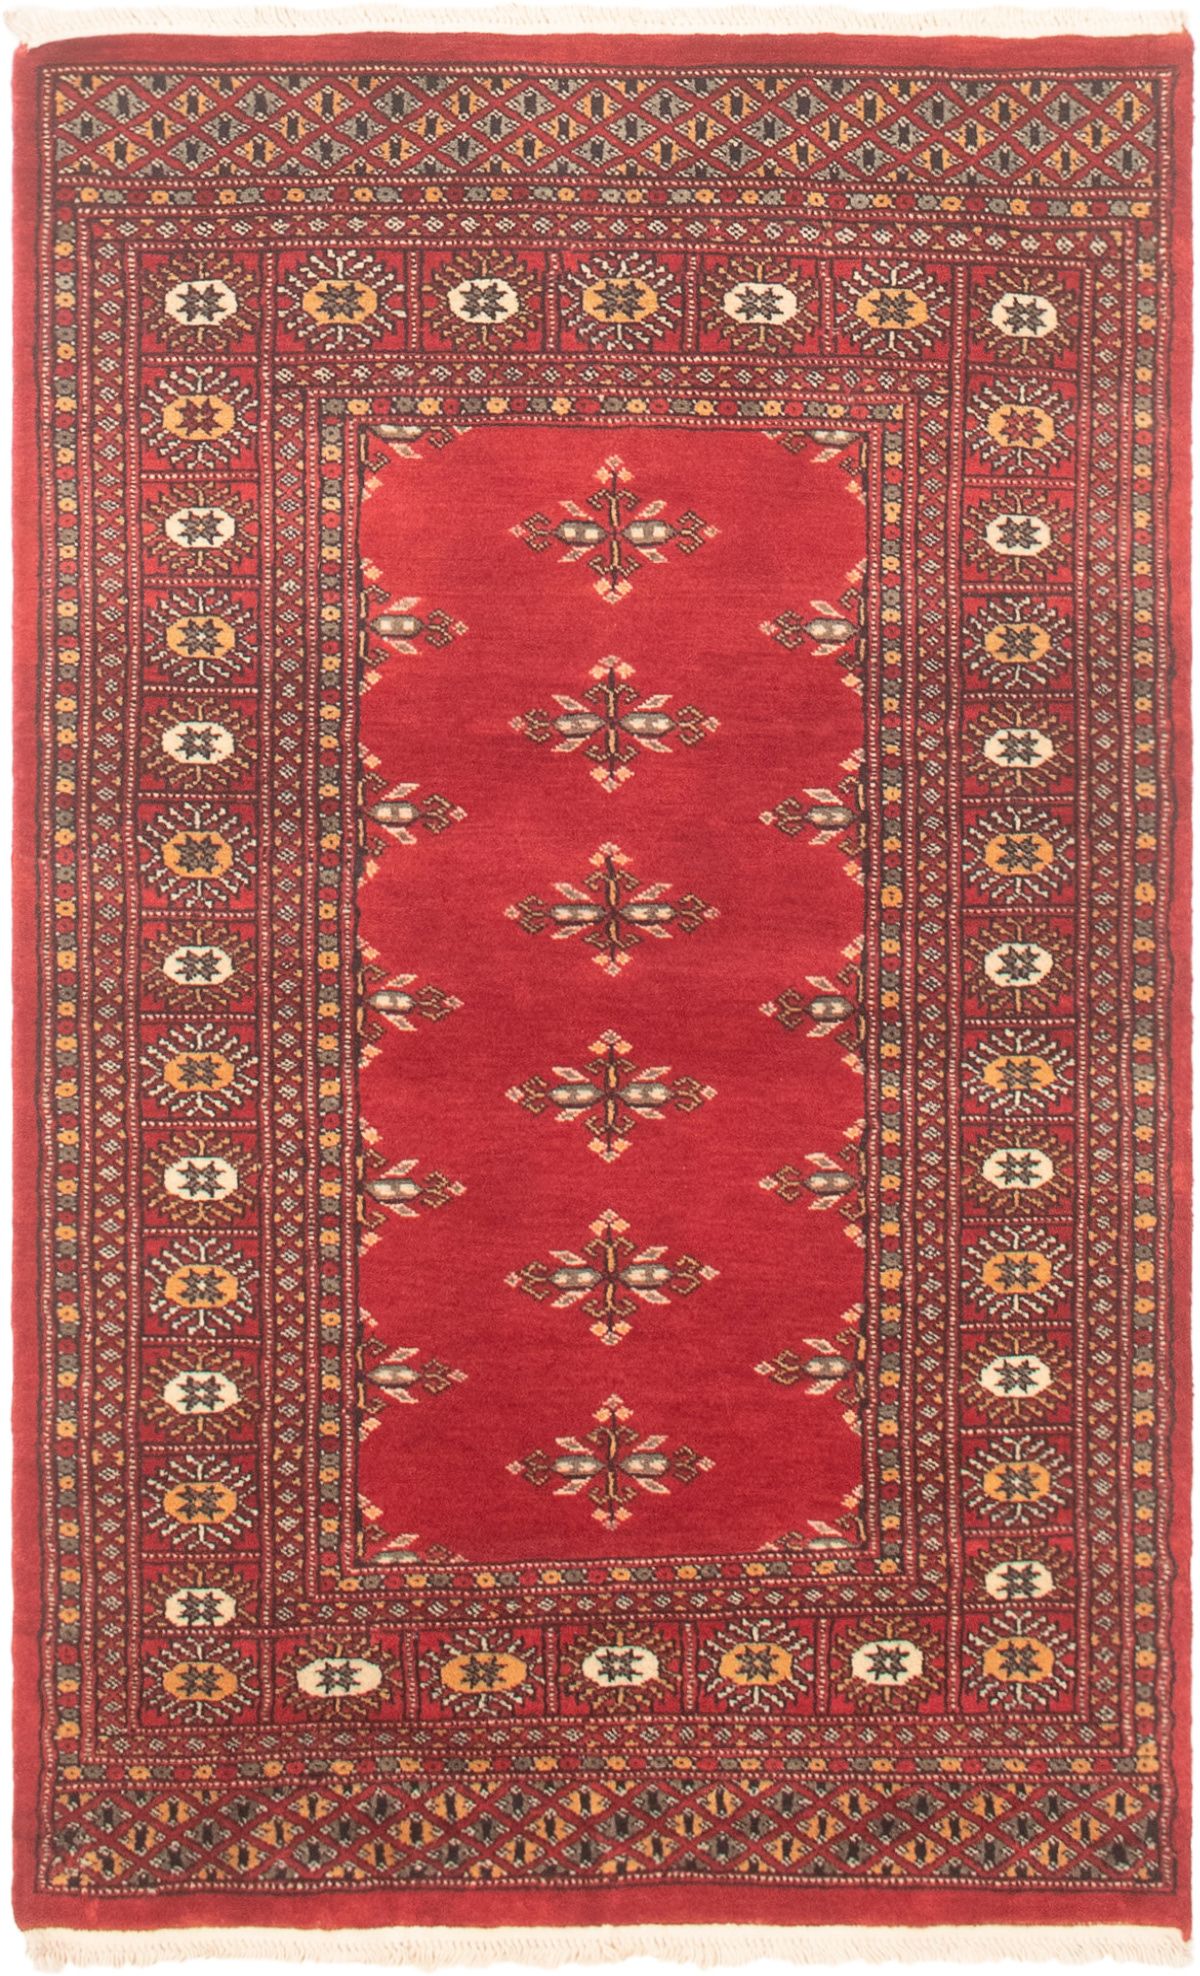 Hand-knotted Finest Peshawar Bokhara Dark Red Wool Rug 3'1" x 5'1"  Size: 3'1" x 5'1"  